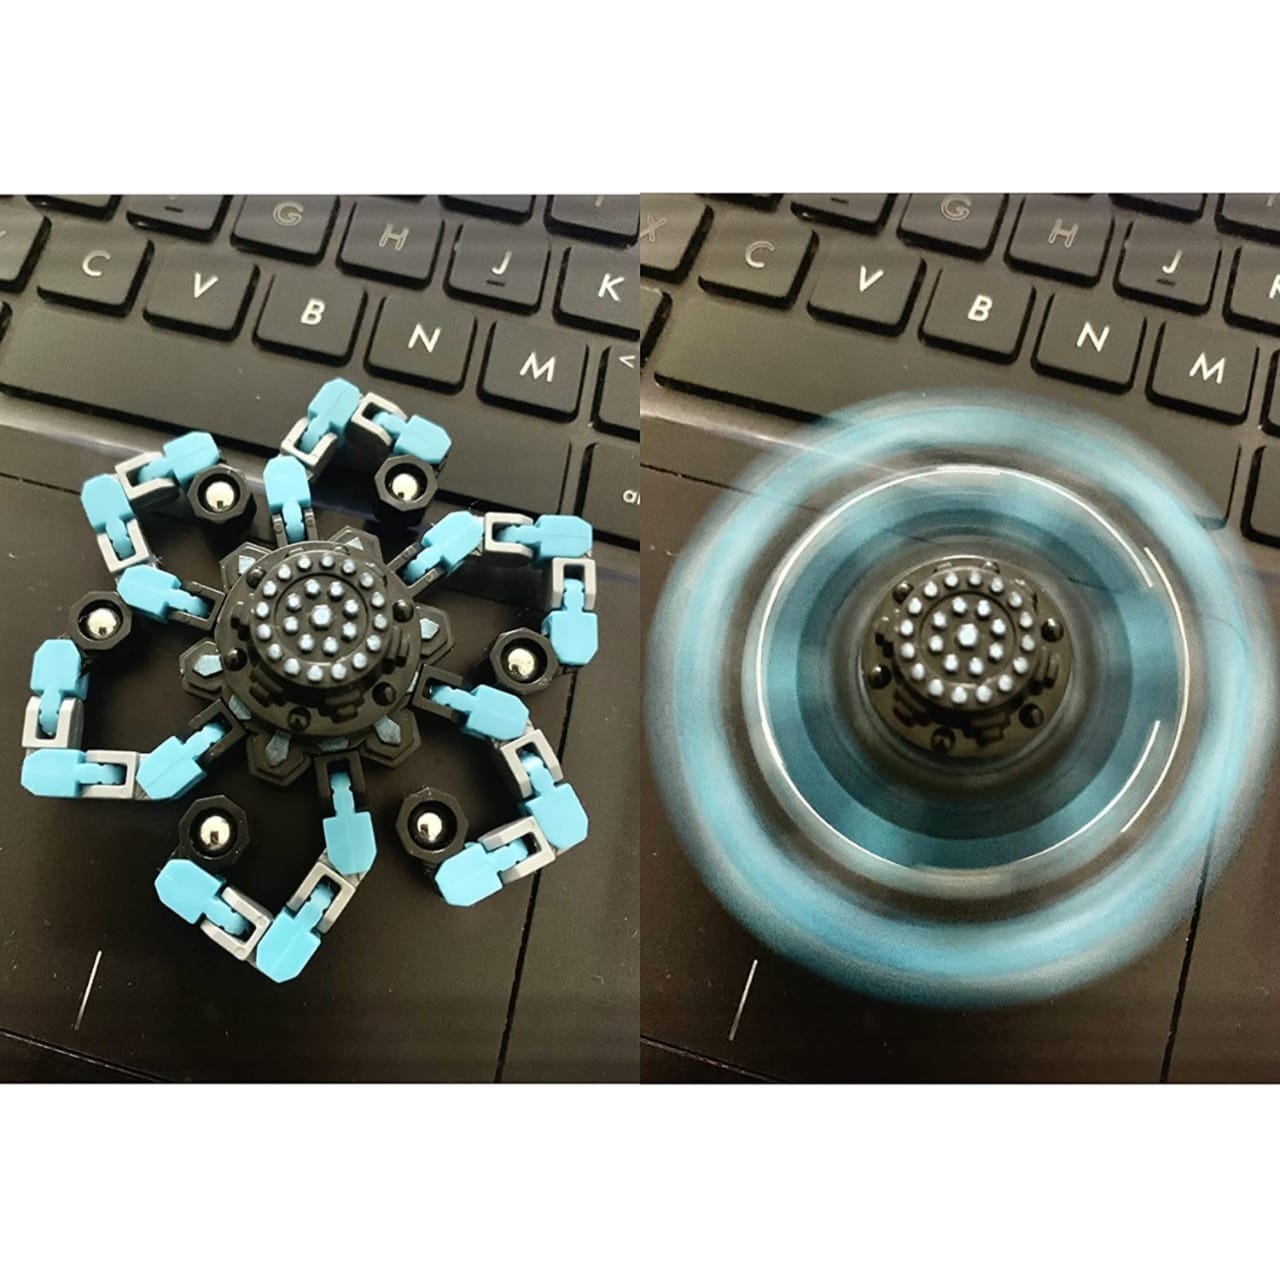 Transformable Fingertip Gyro Fidget Spinners Toys For Boys and Girls